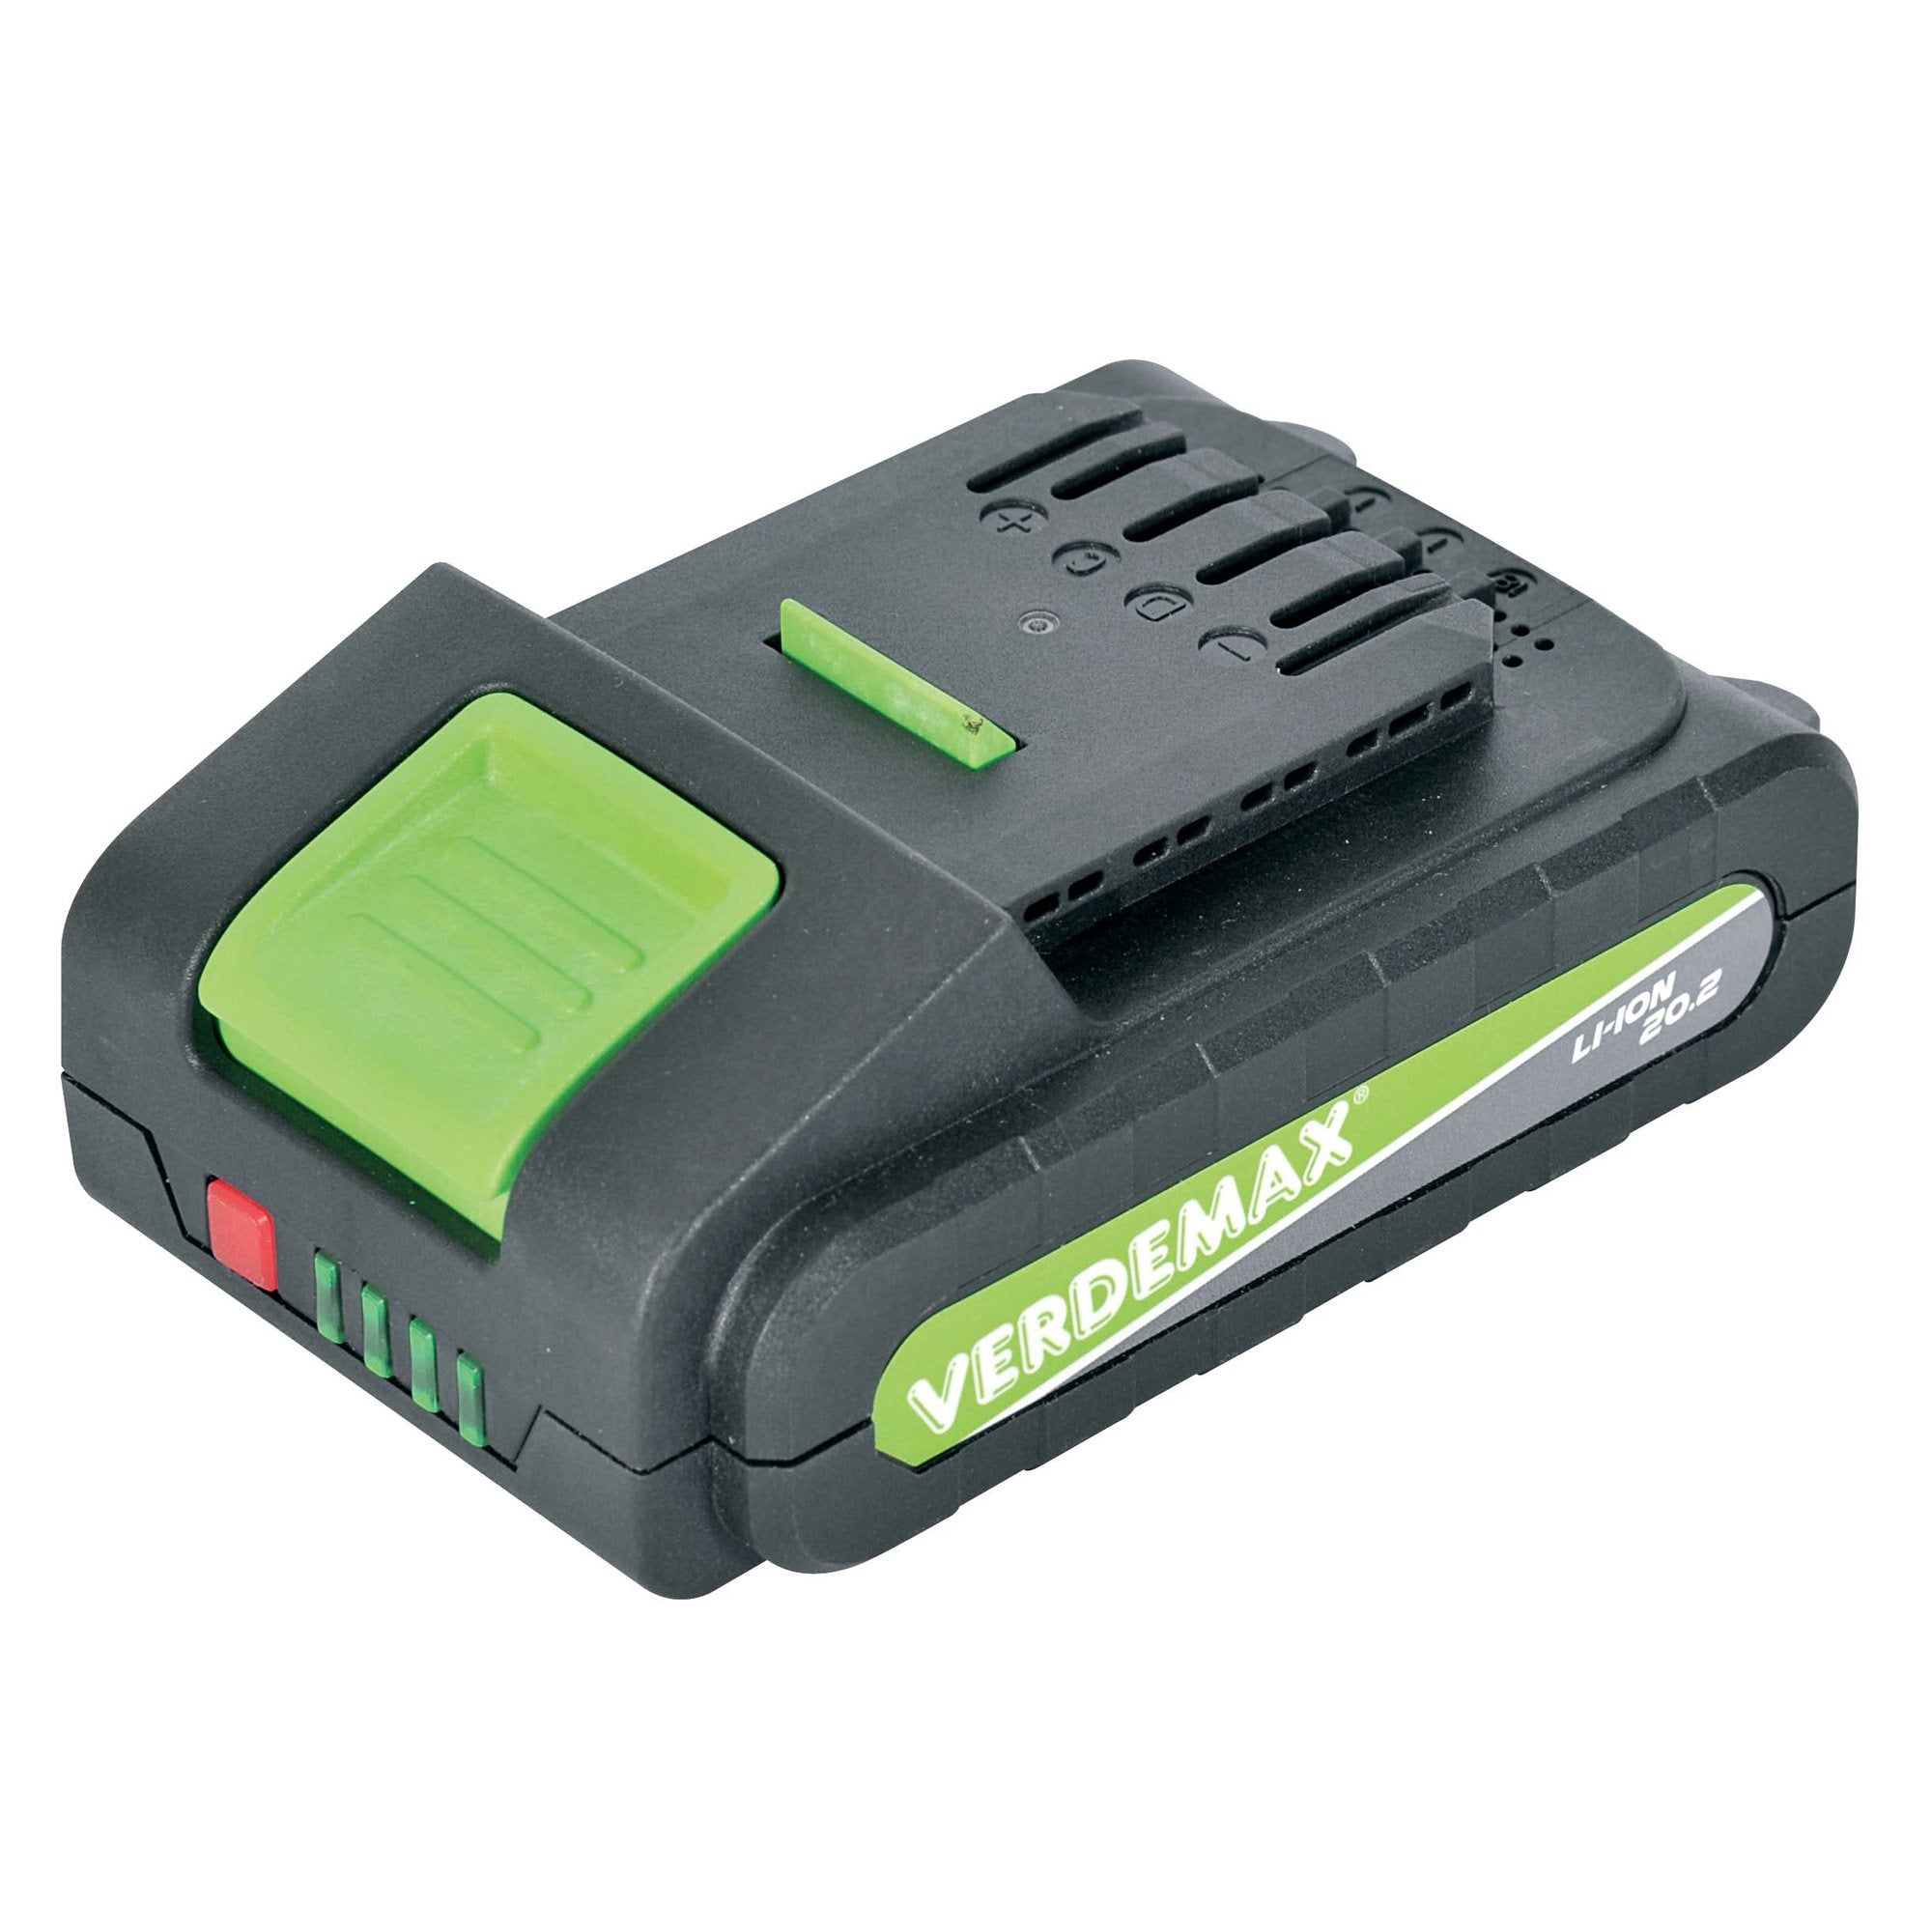 verdemax-batteria-ricambio-20v-2ah-art-4352-attrezzi